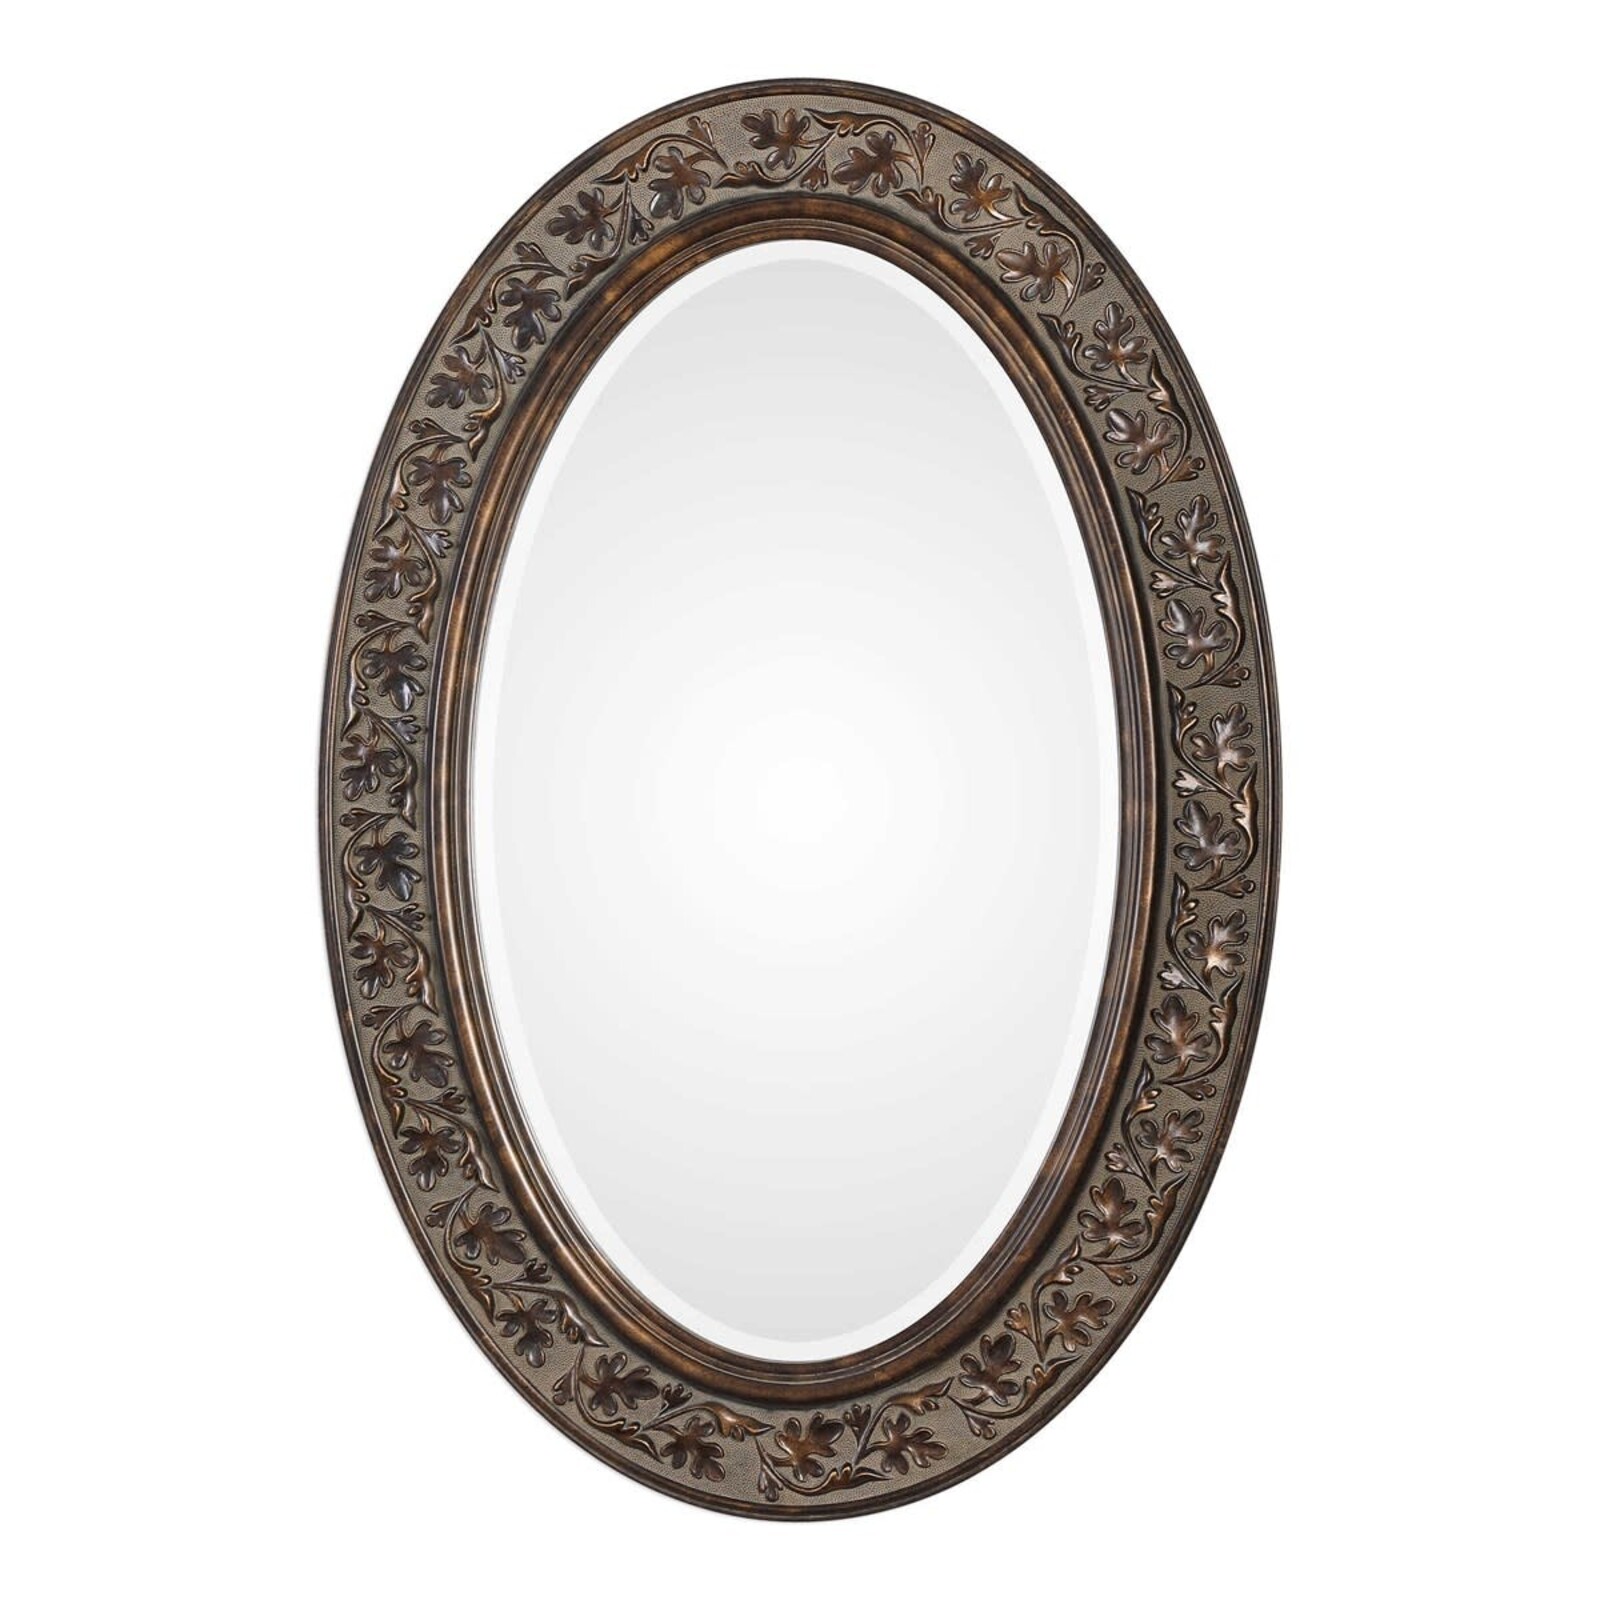 Uttermost Oval Flowing Leaf Design Mirror   #W00430 loading=